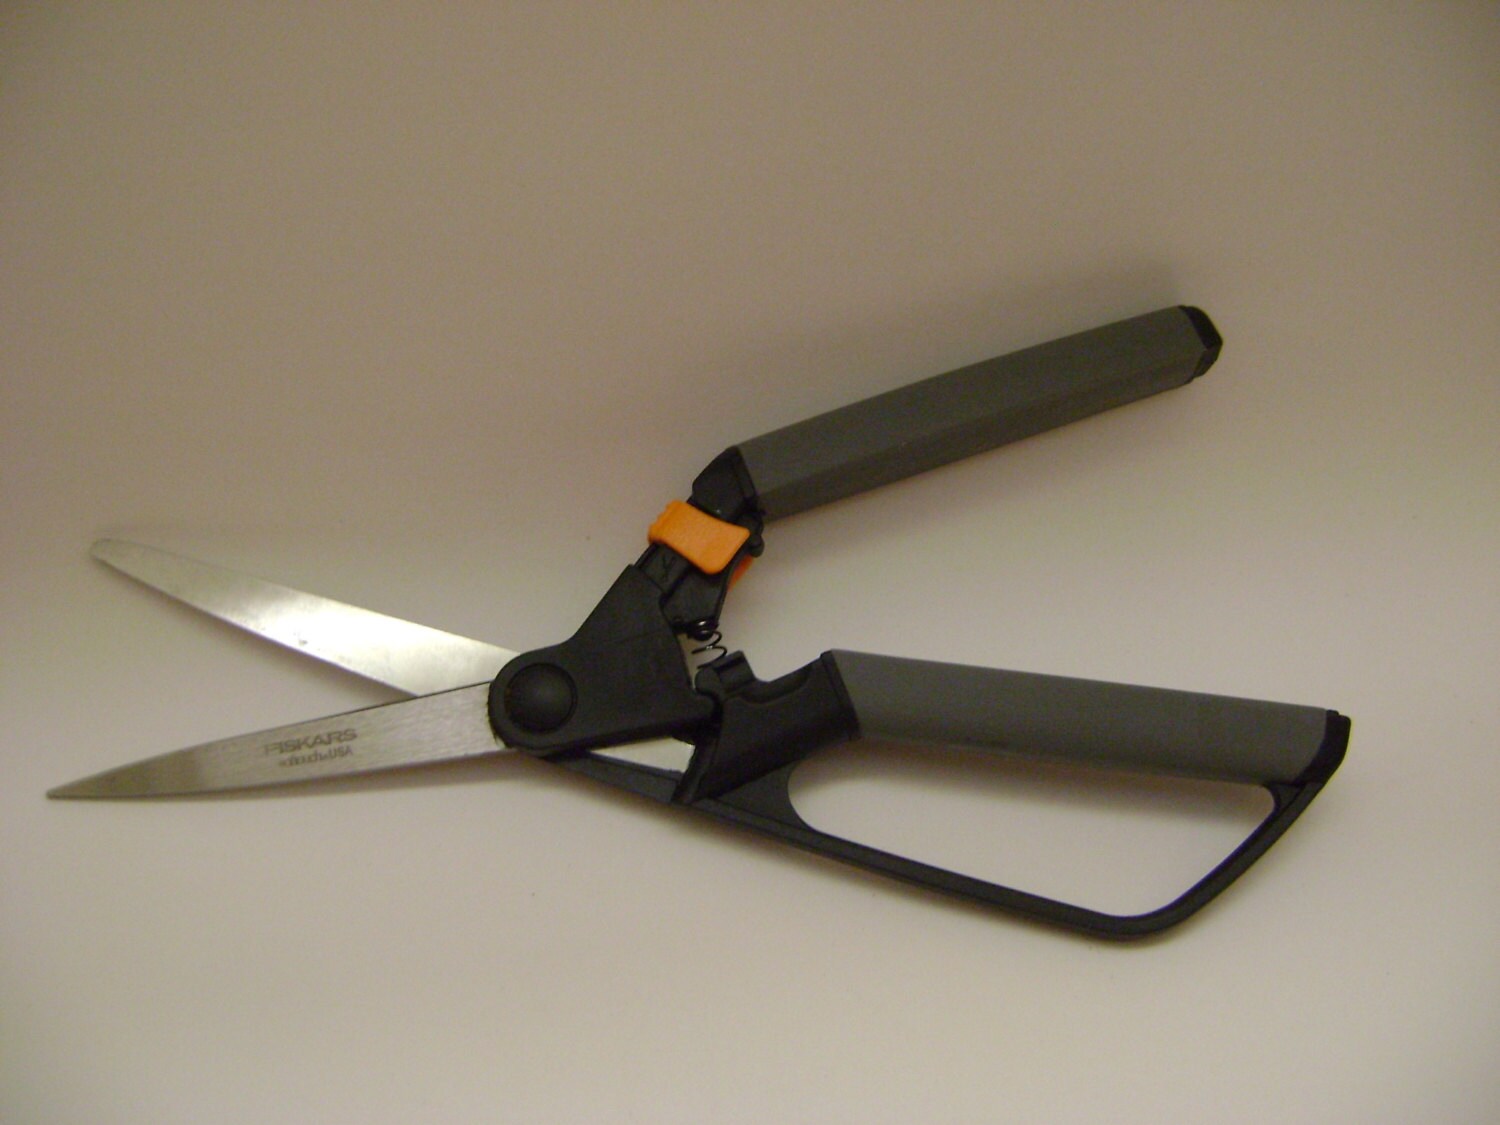 Fiskars Softouch 8'' Multi-Purpose Scissors